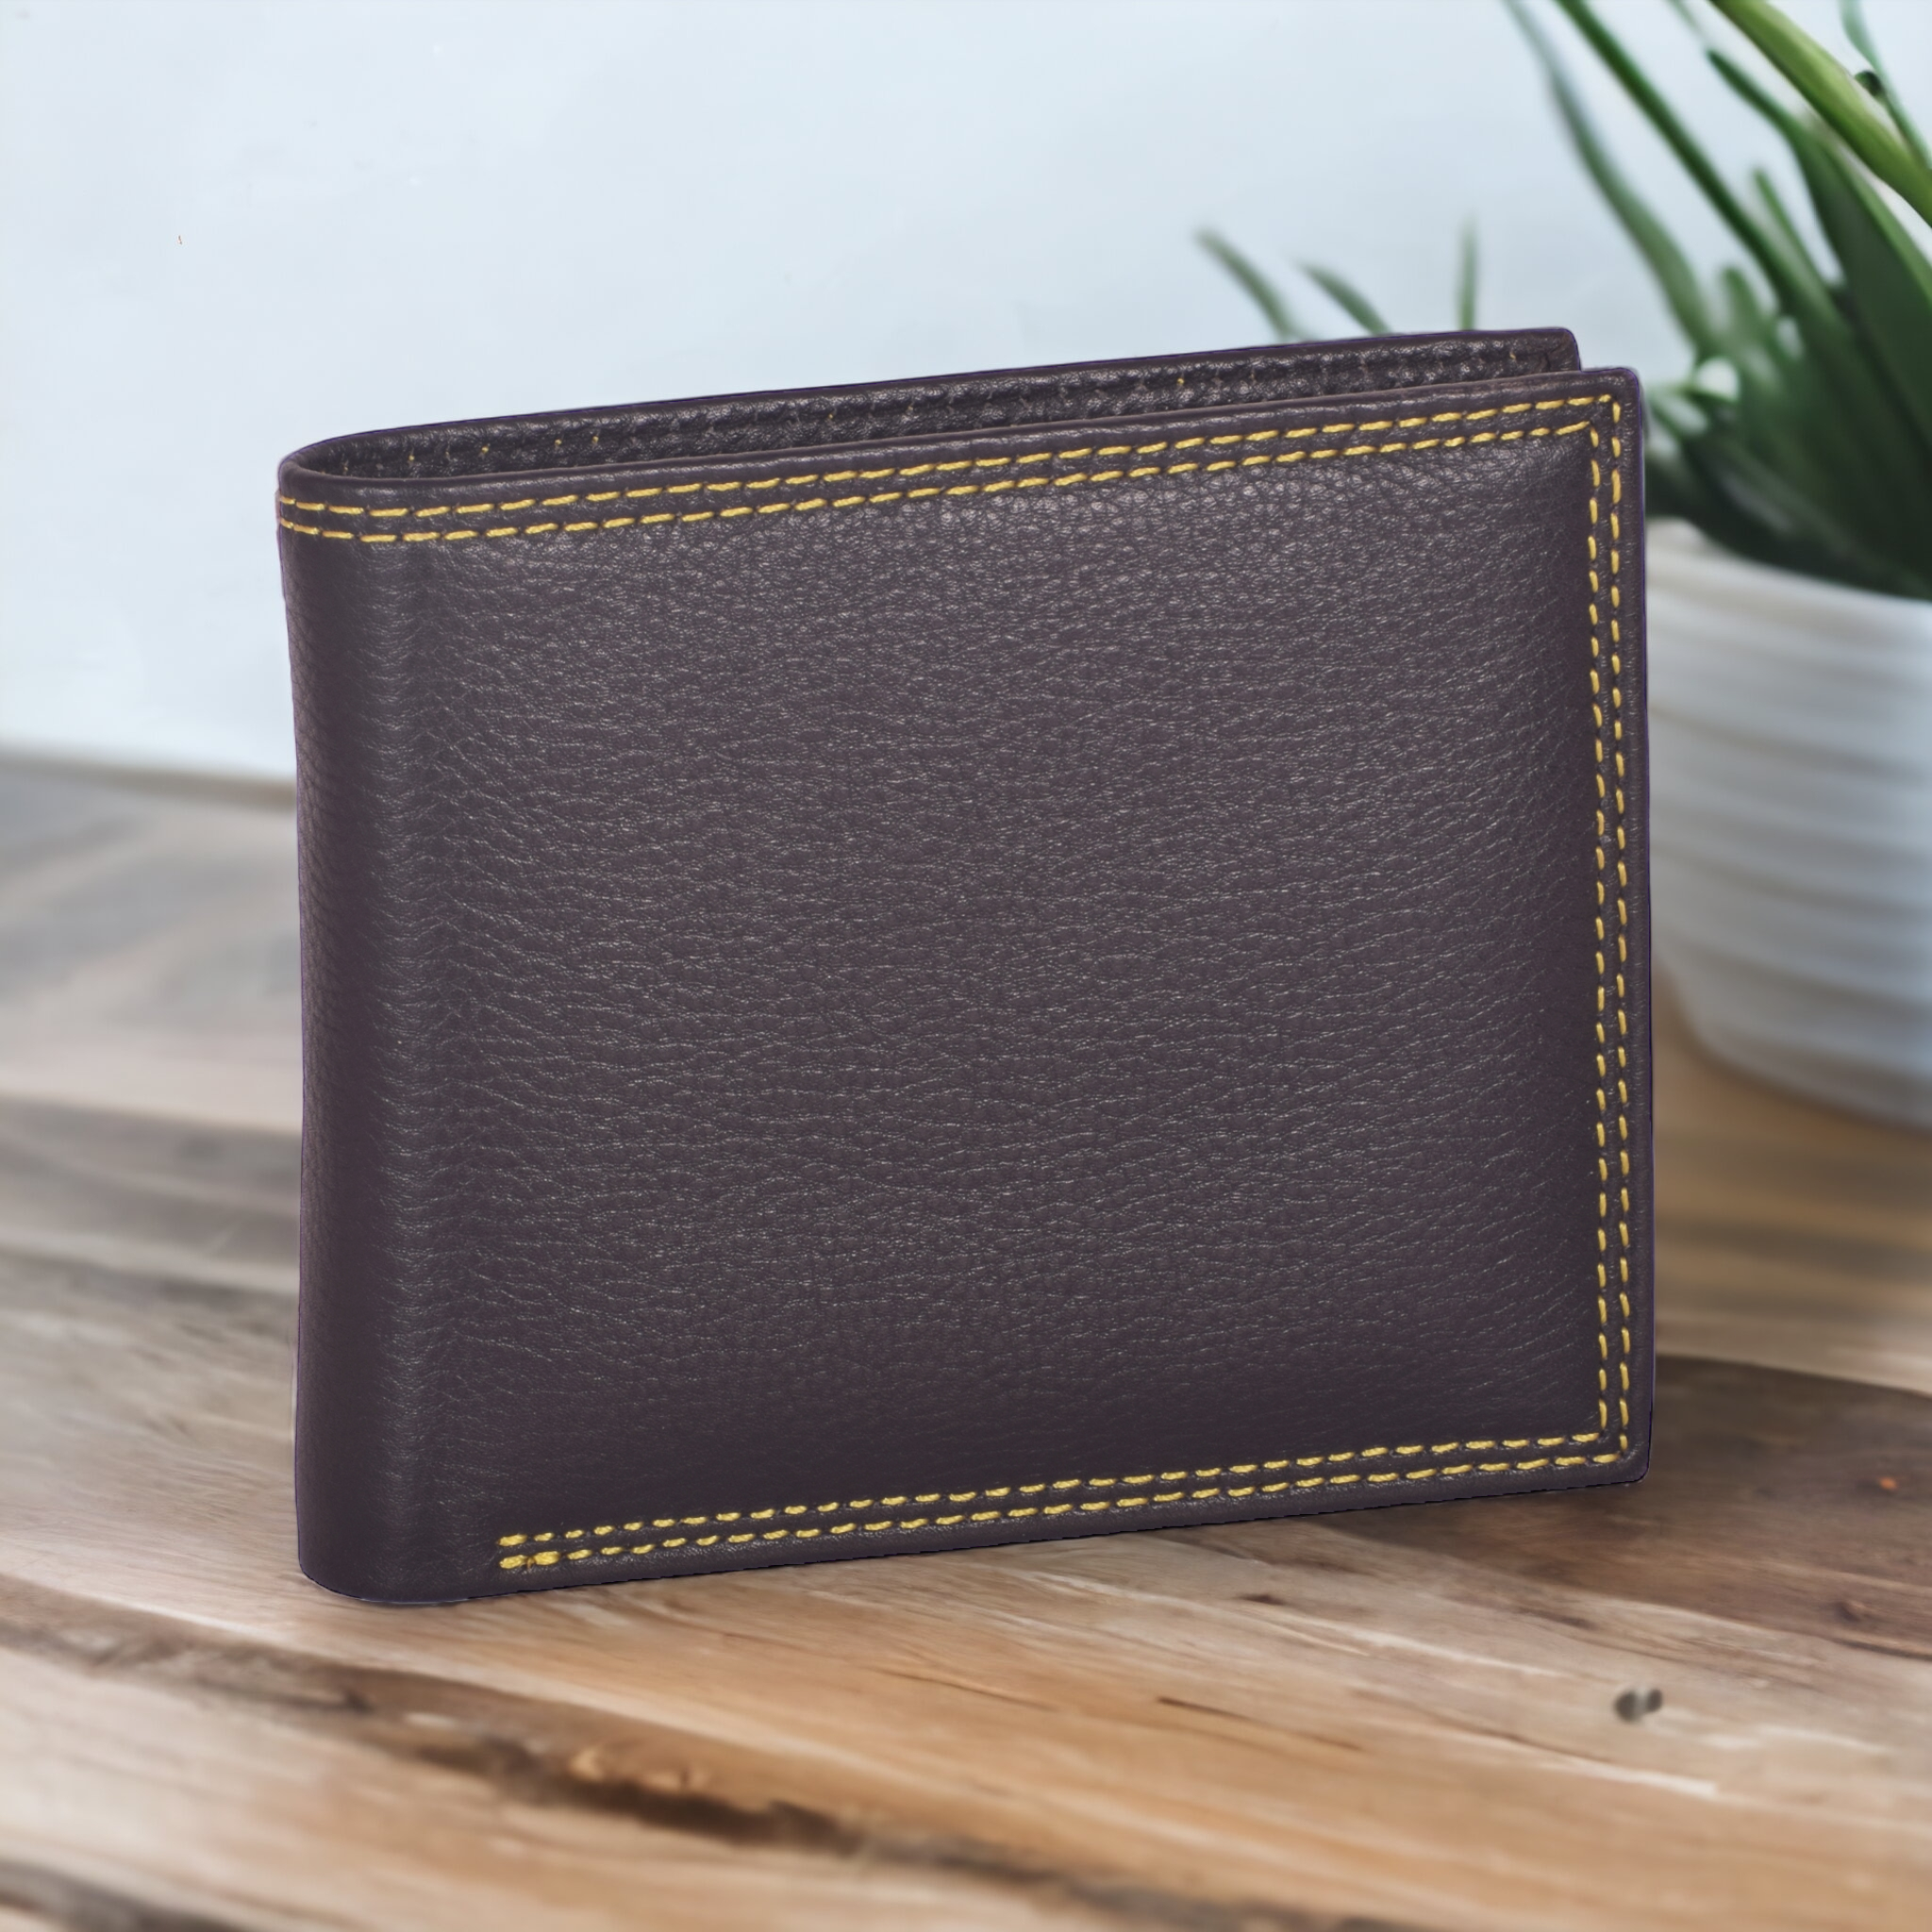 Buy Men Brown Genuine Leather Wallet Online - 746608 | Van Heusen